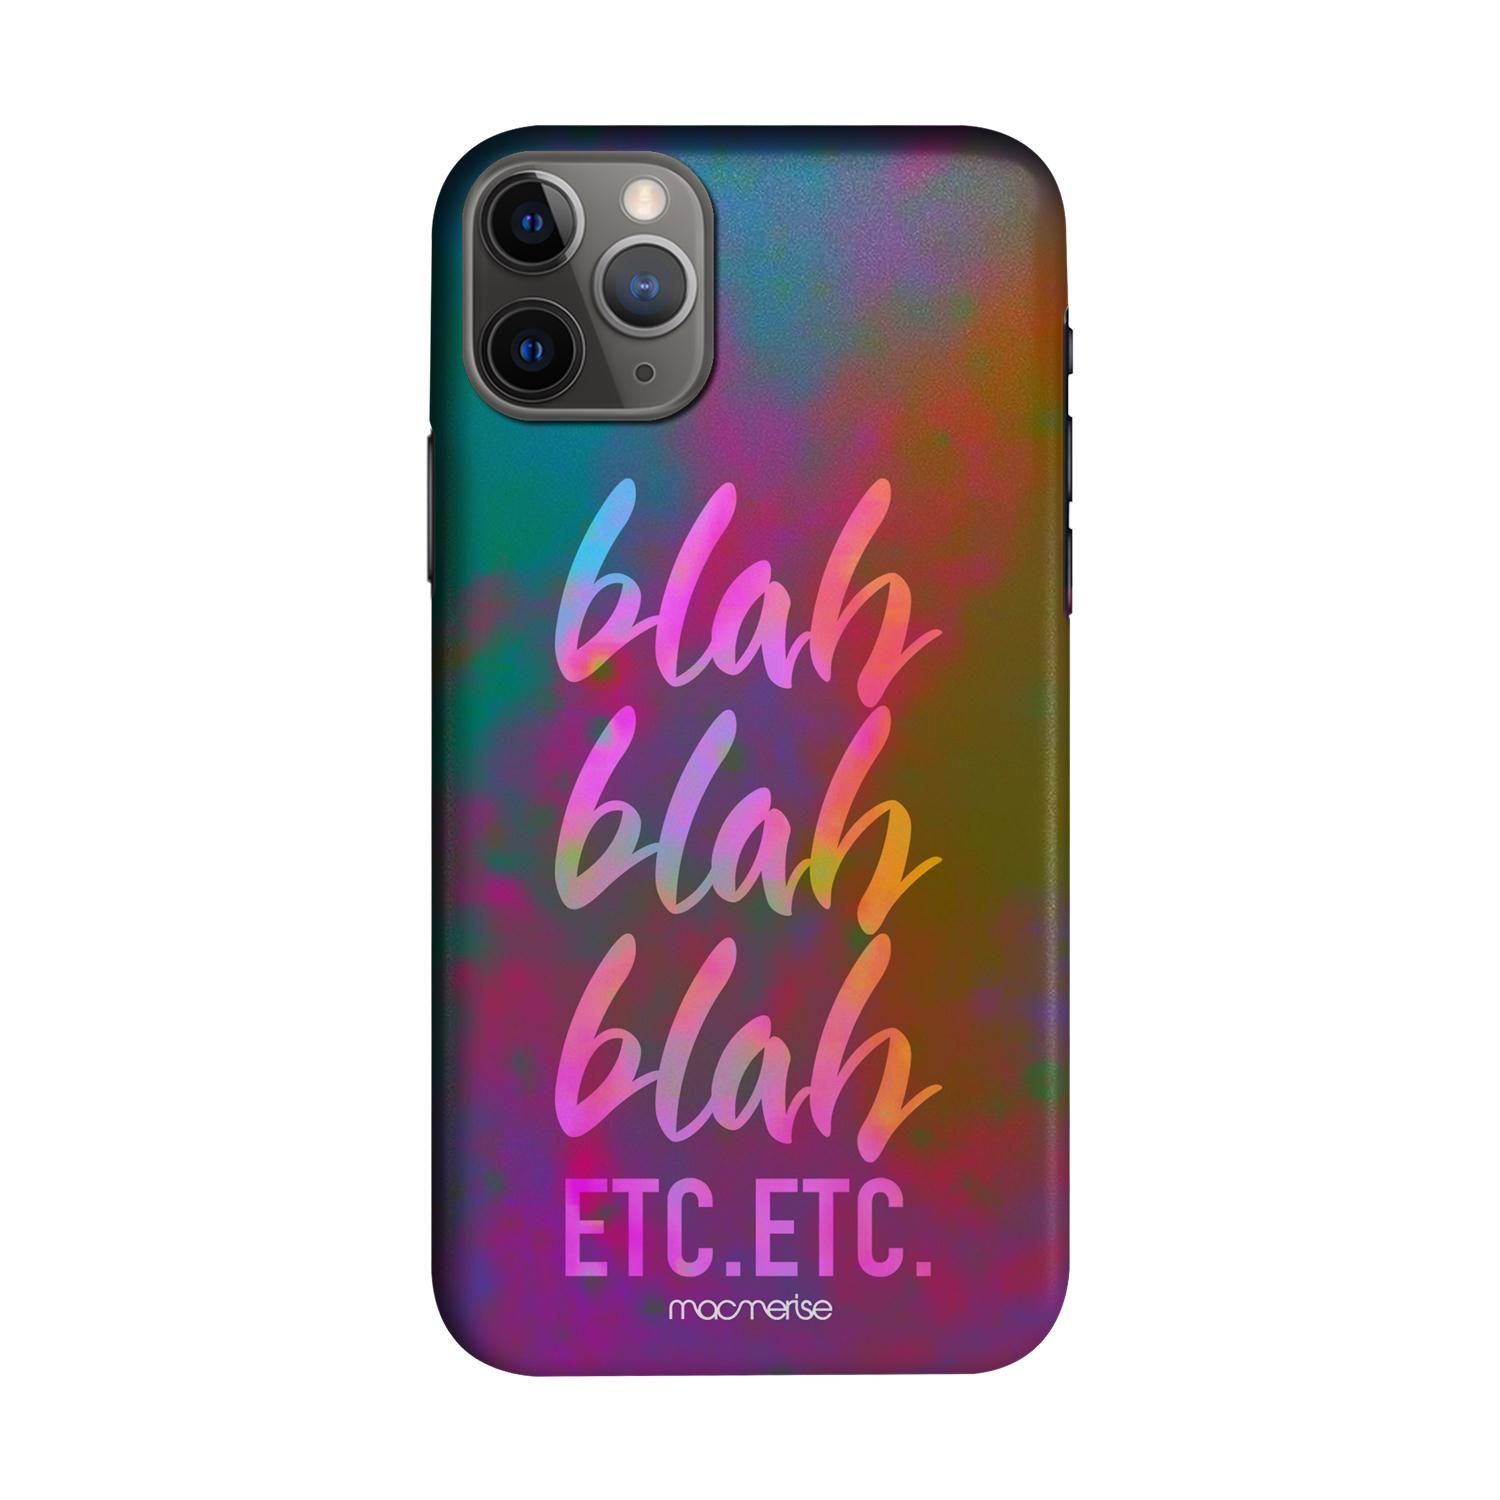 Buy Blah Blah - Sleek Phone Case for iPhone 11 Pro Max Online